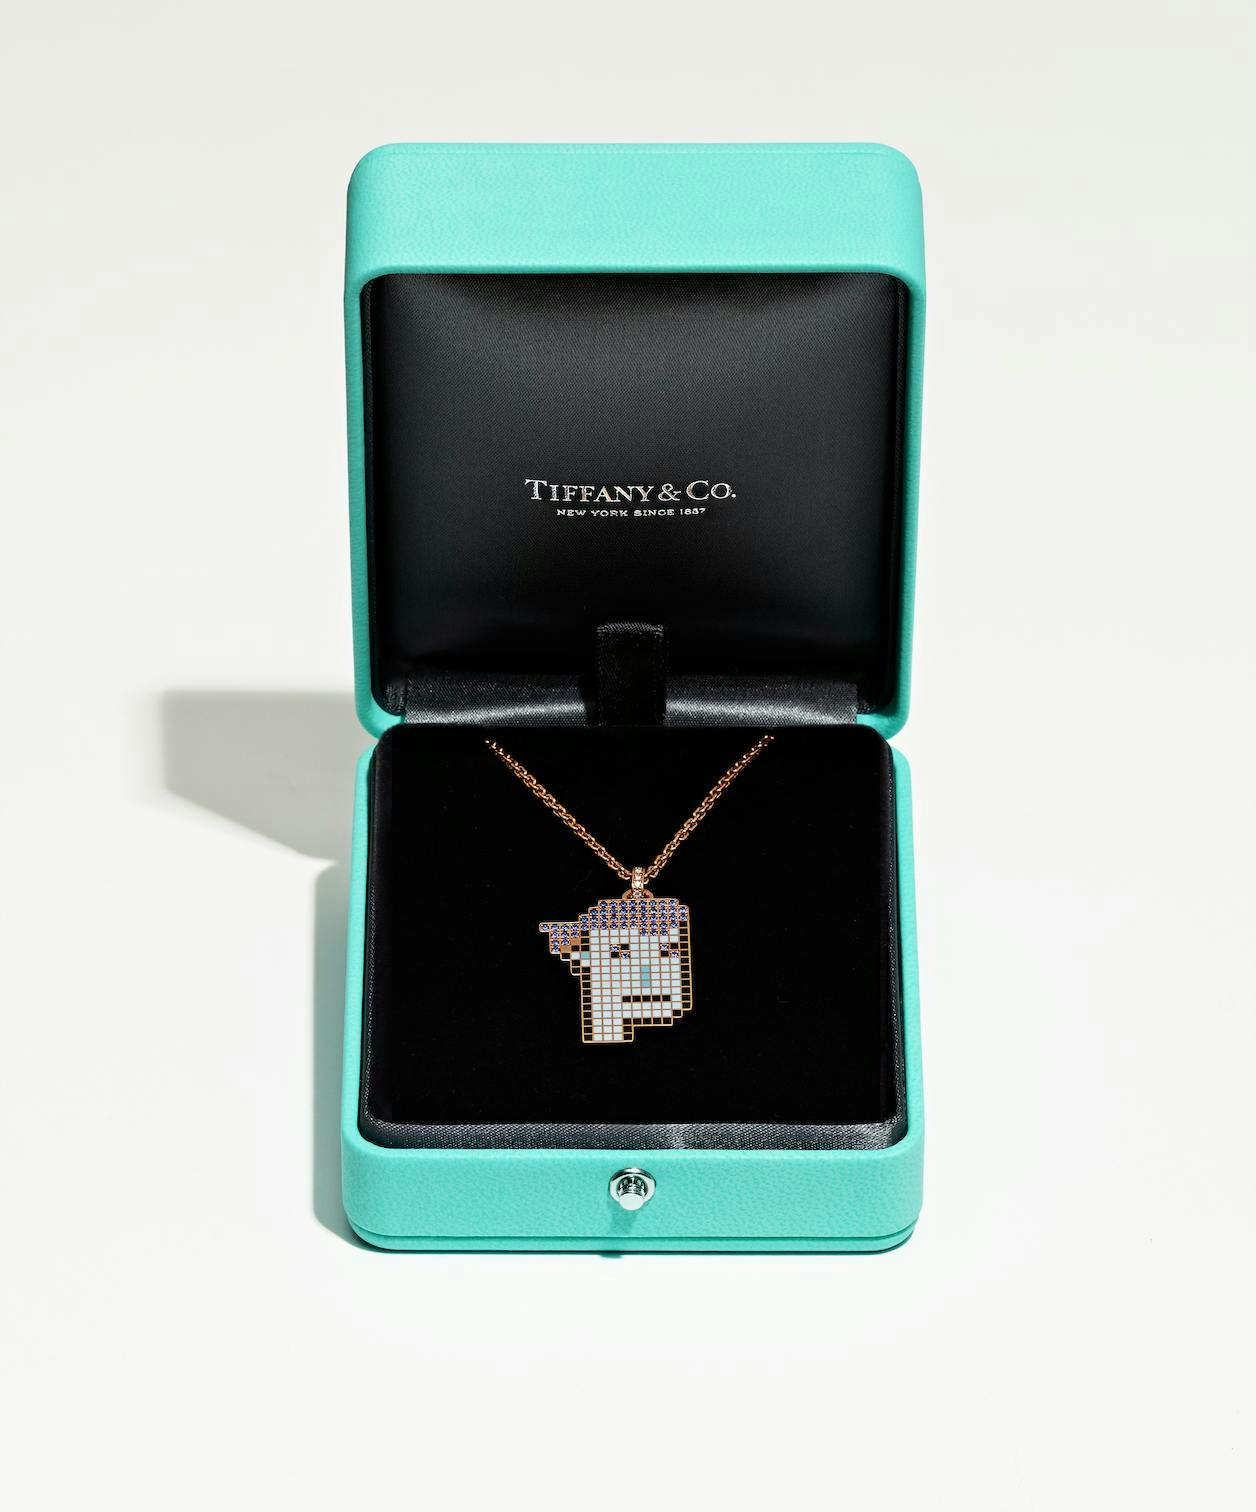 Tiffany & Co. to Make Custom Jewellery Based on CryptoPunks NFTs